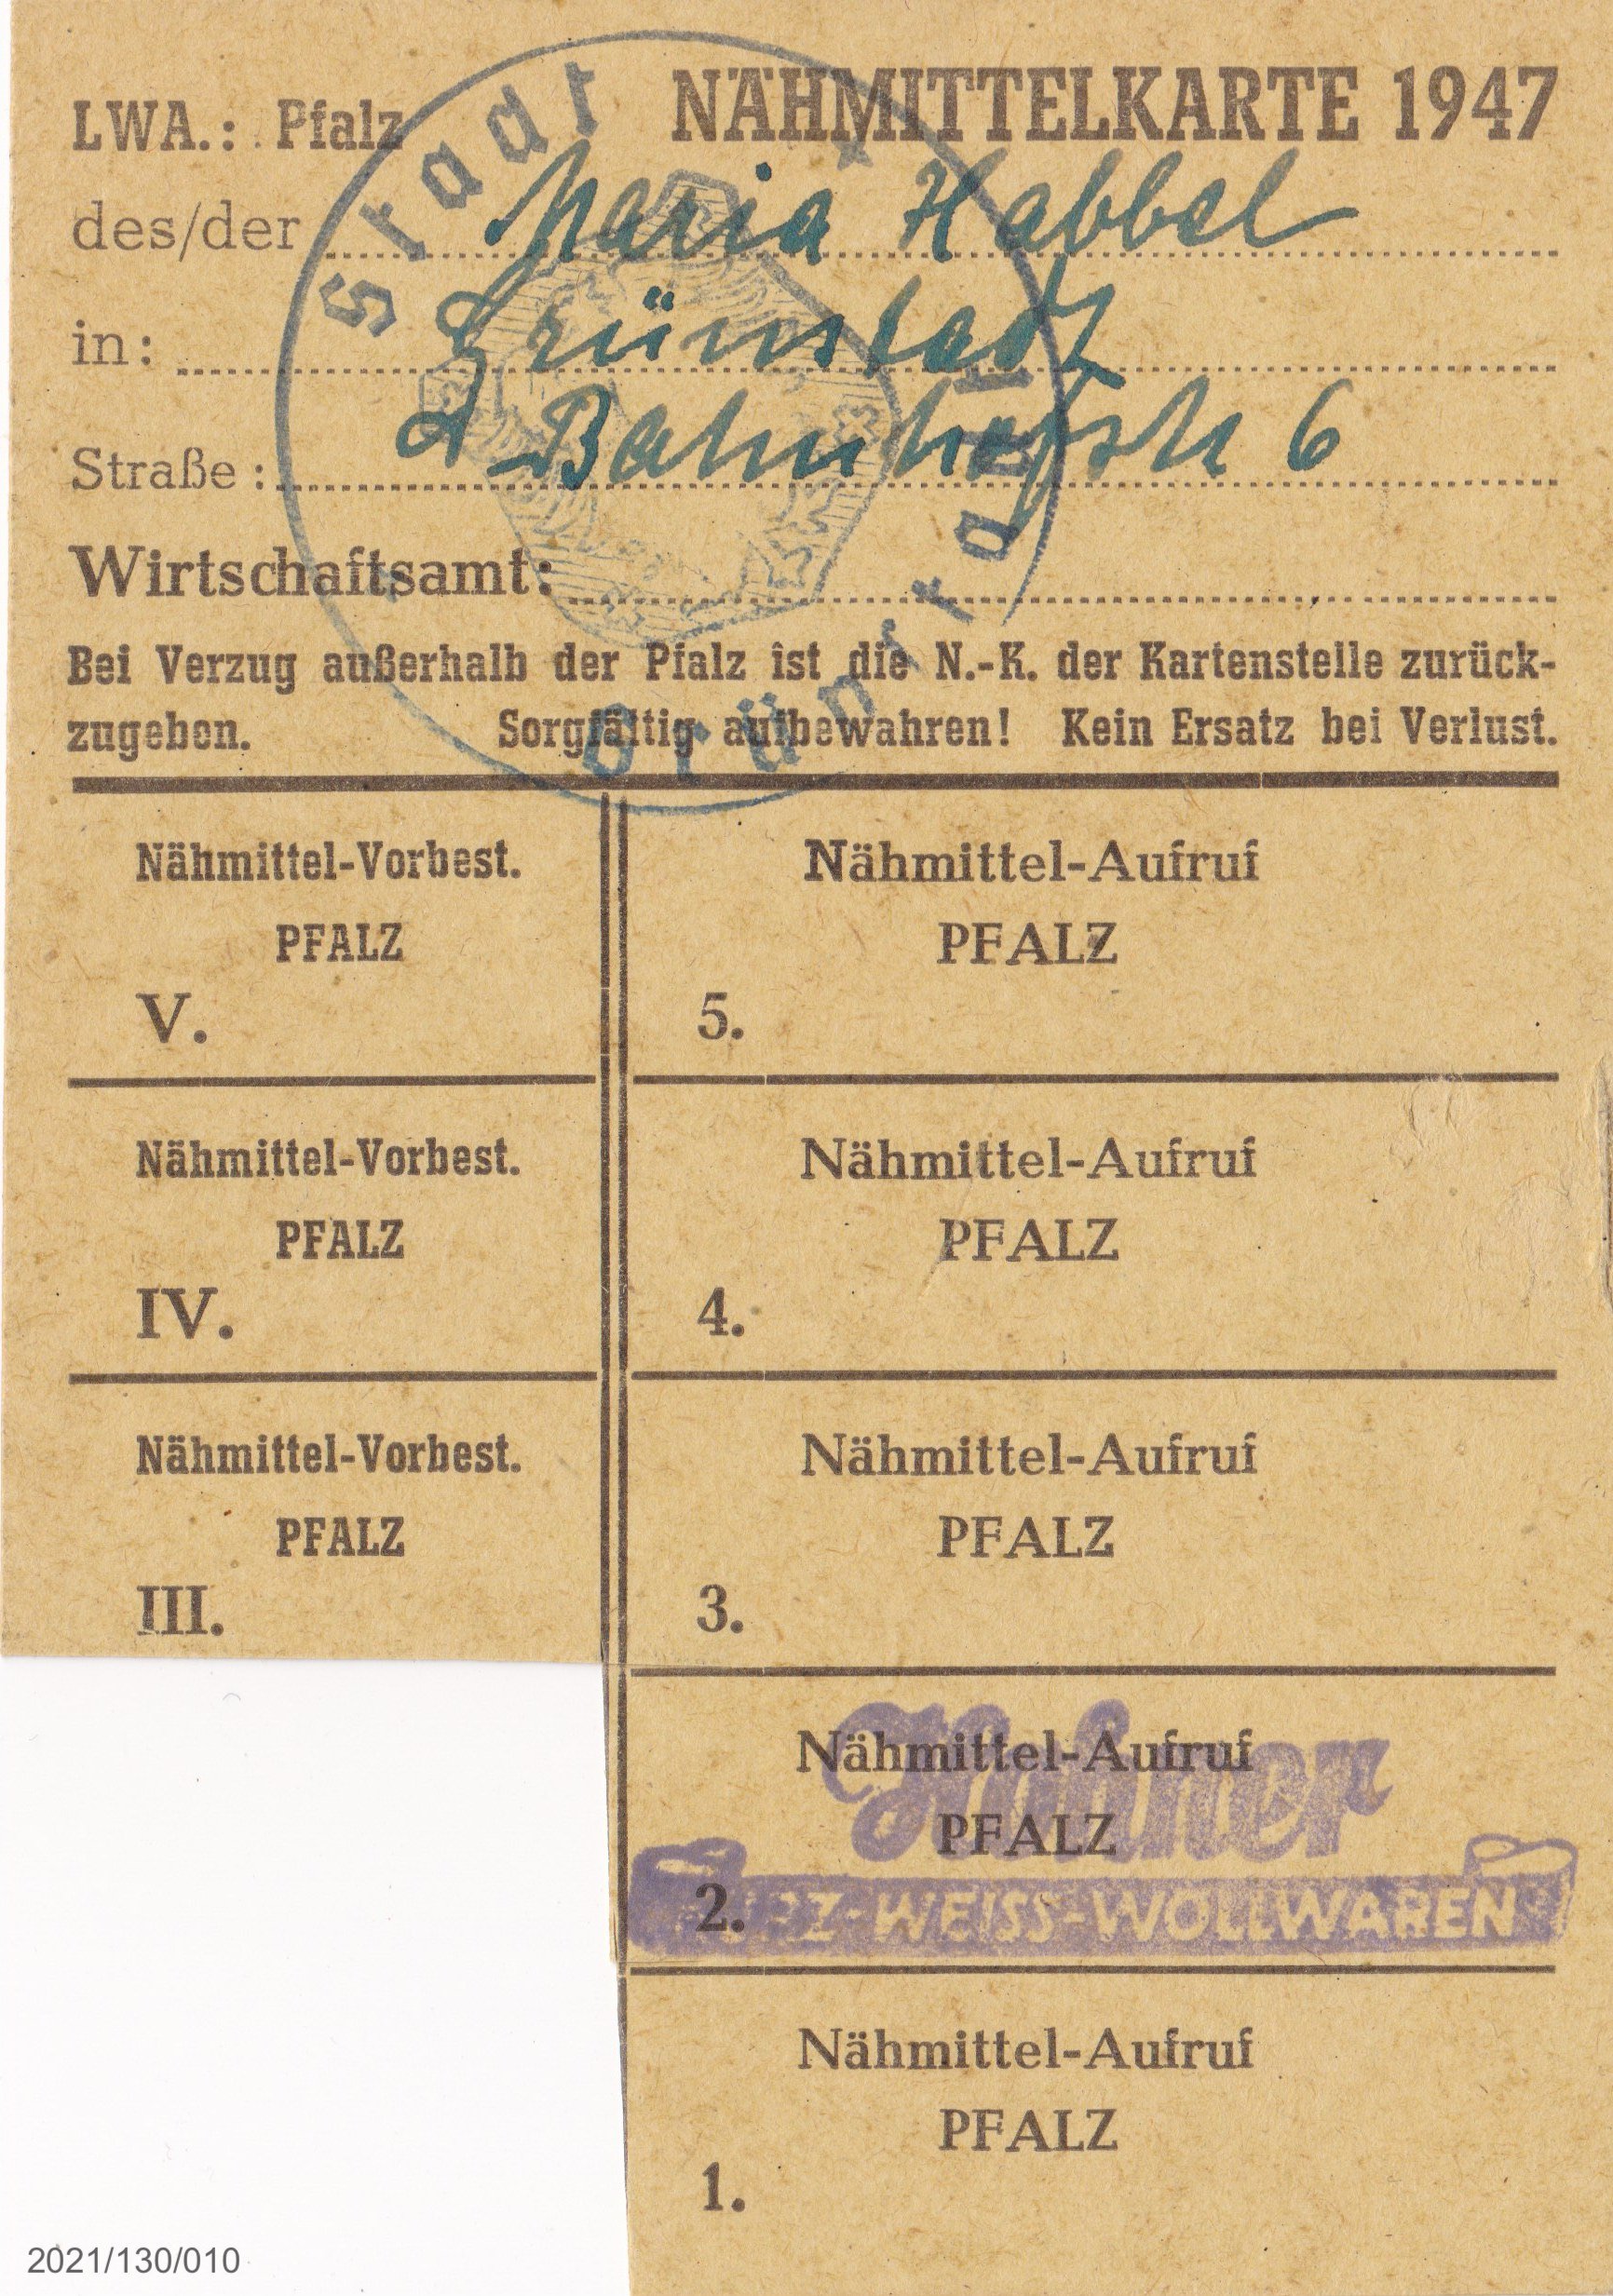 Nähmittelkarte 1947 Pfalz (Museumsgesellschaft Bad Dürkheim e. V. CC BY-NC-SA)